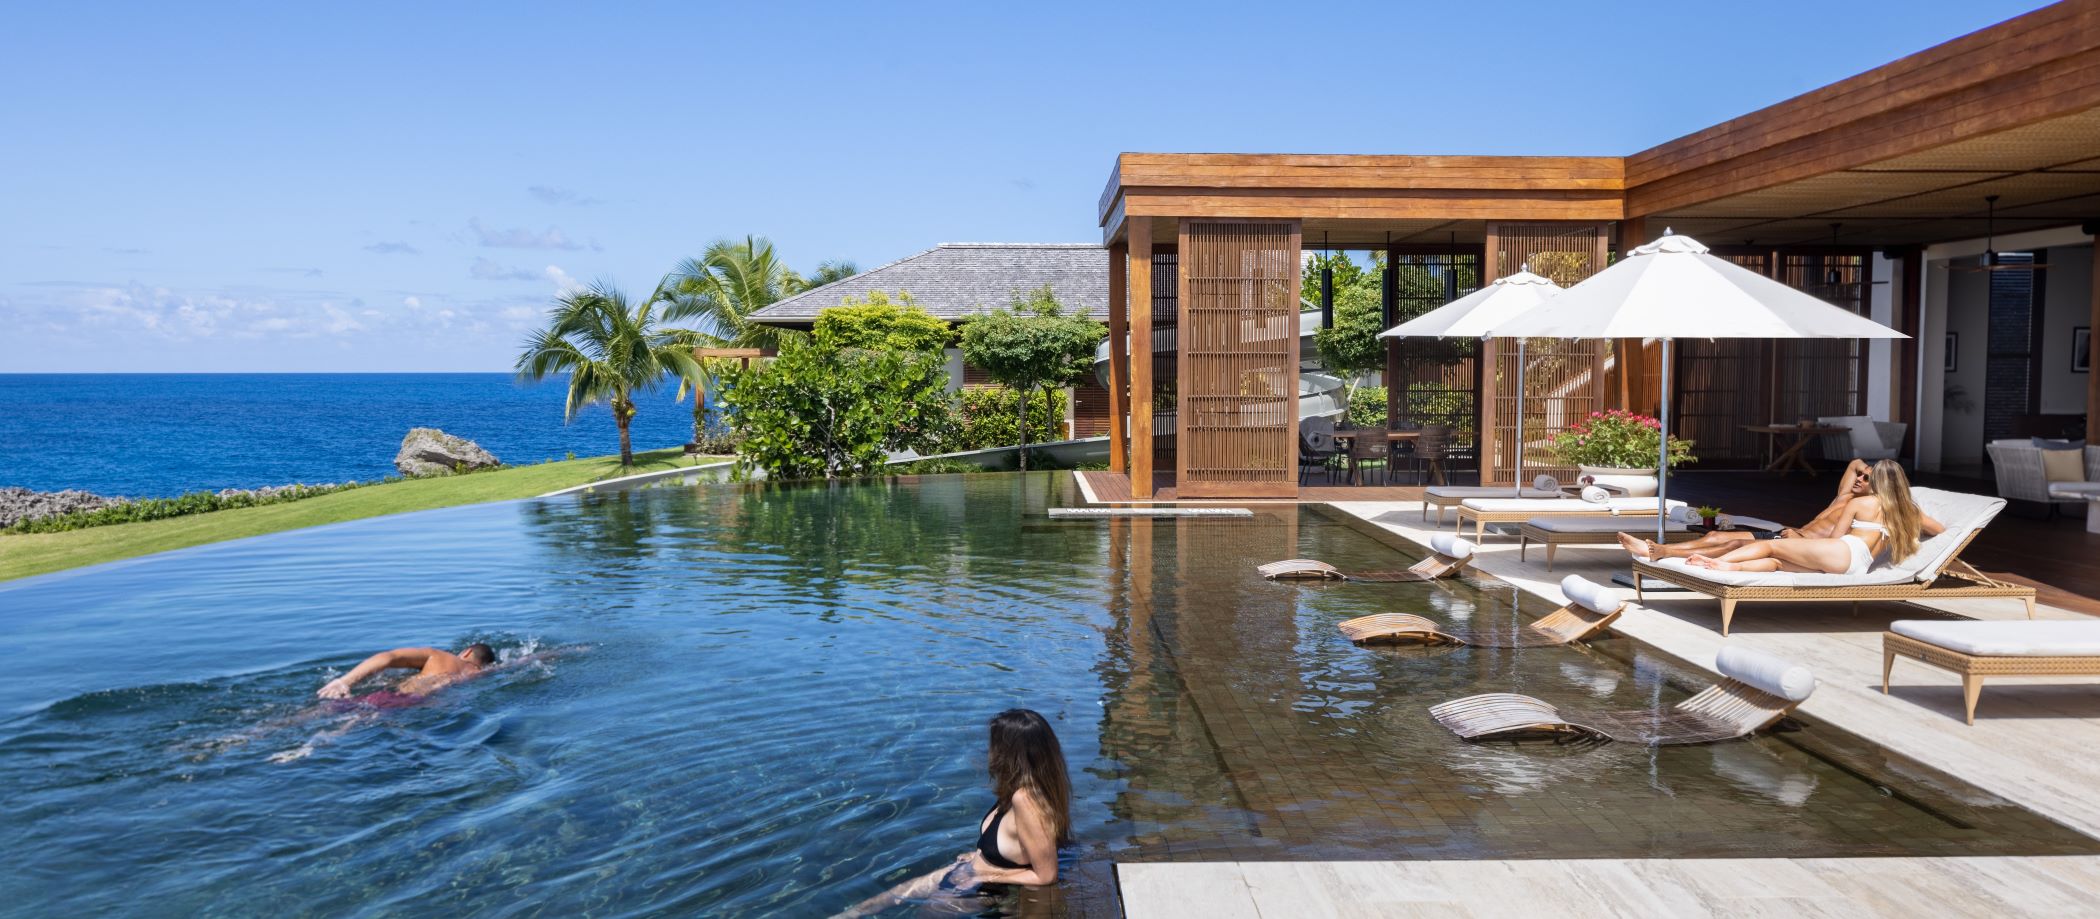 ANI Dominican Republic - Private Villa Resort - Villa Amber - Pool - Guests Enjoying Pool 9 - 16-7